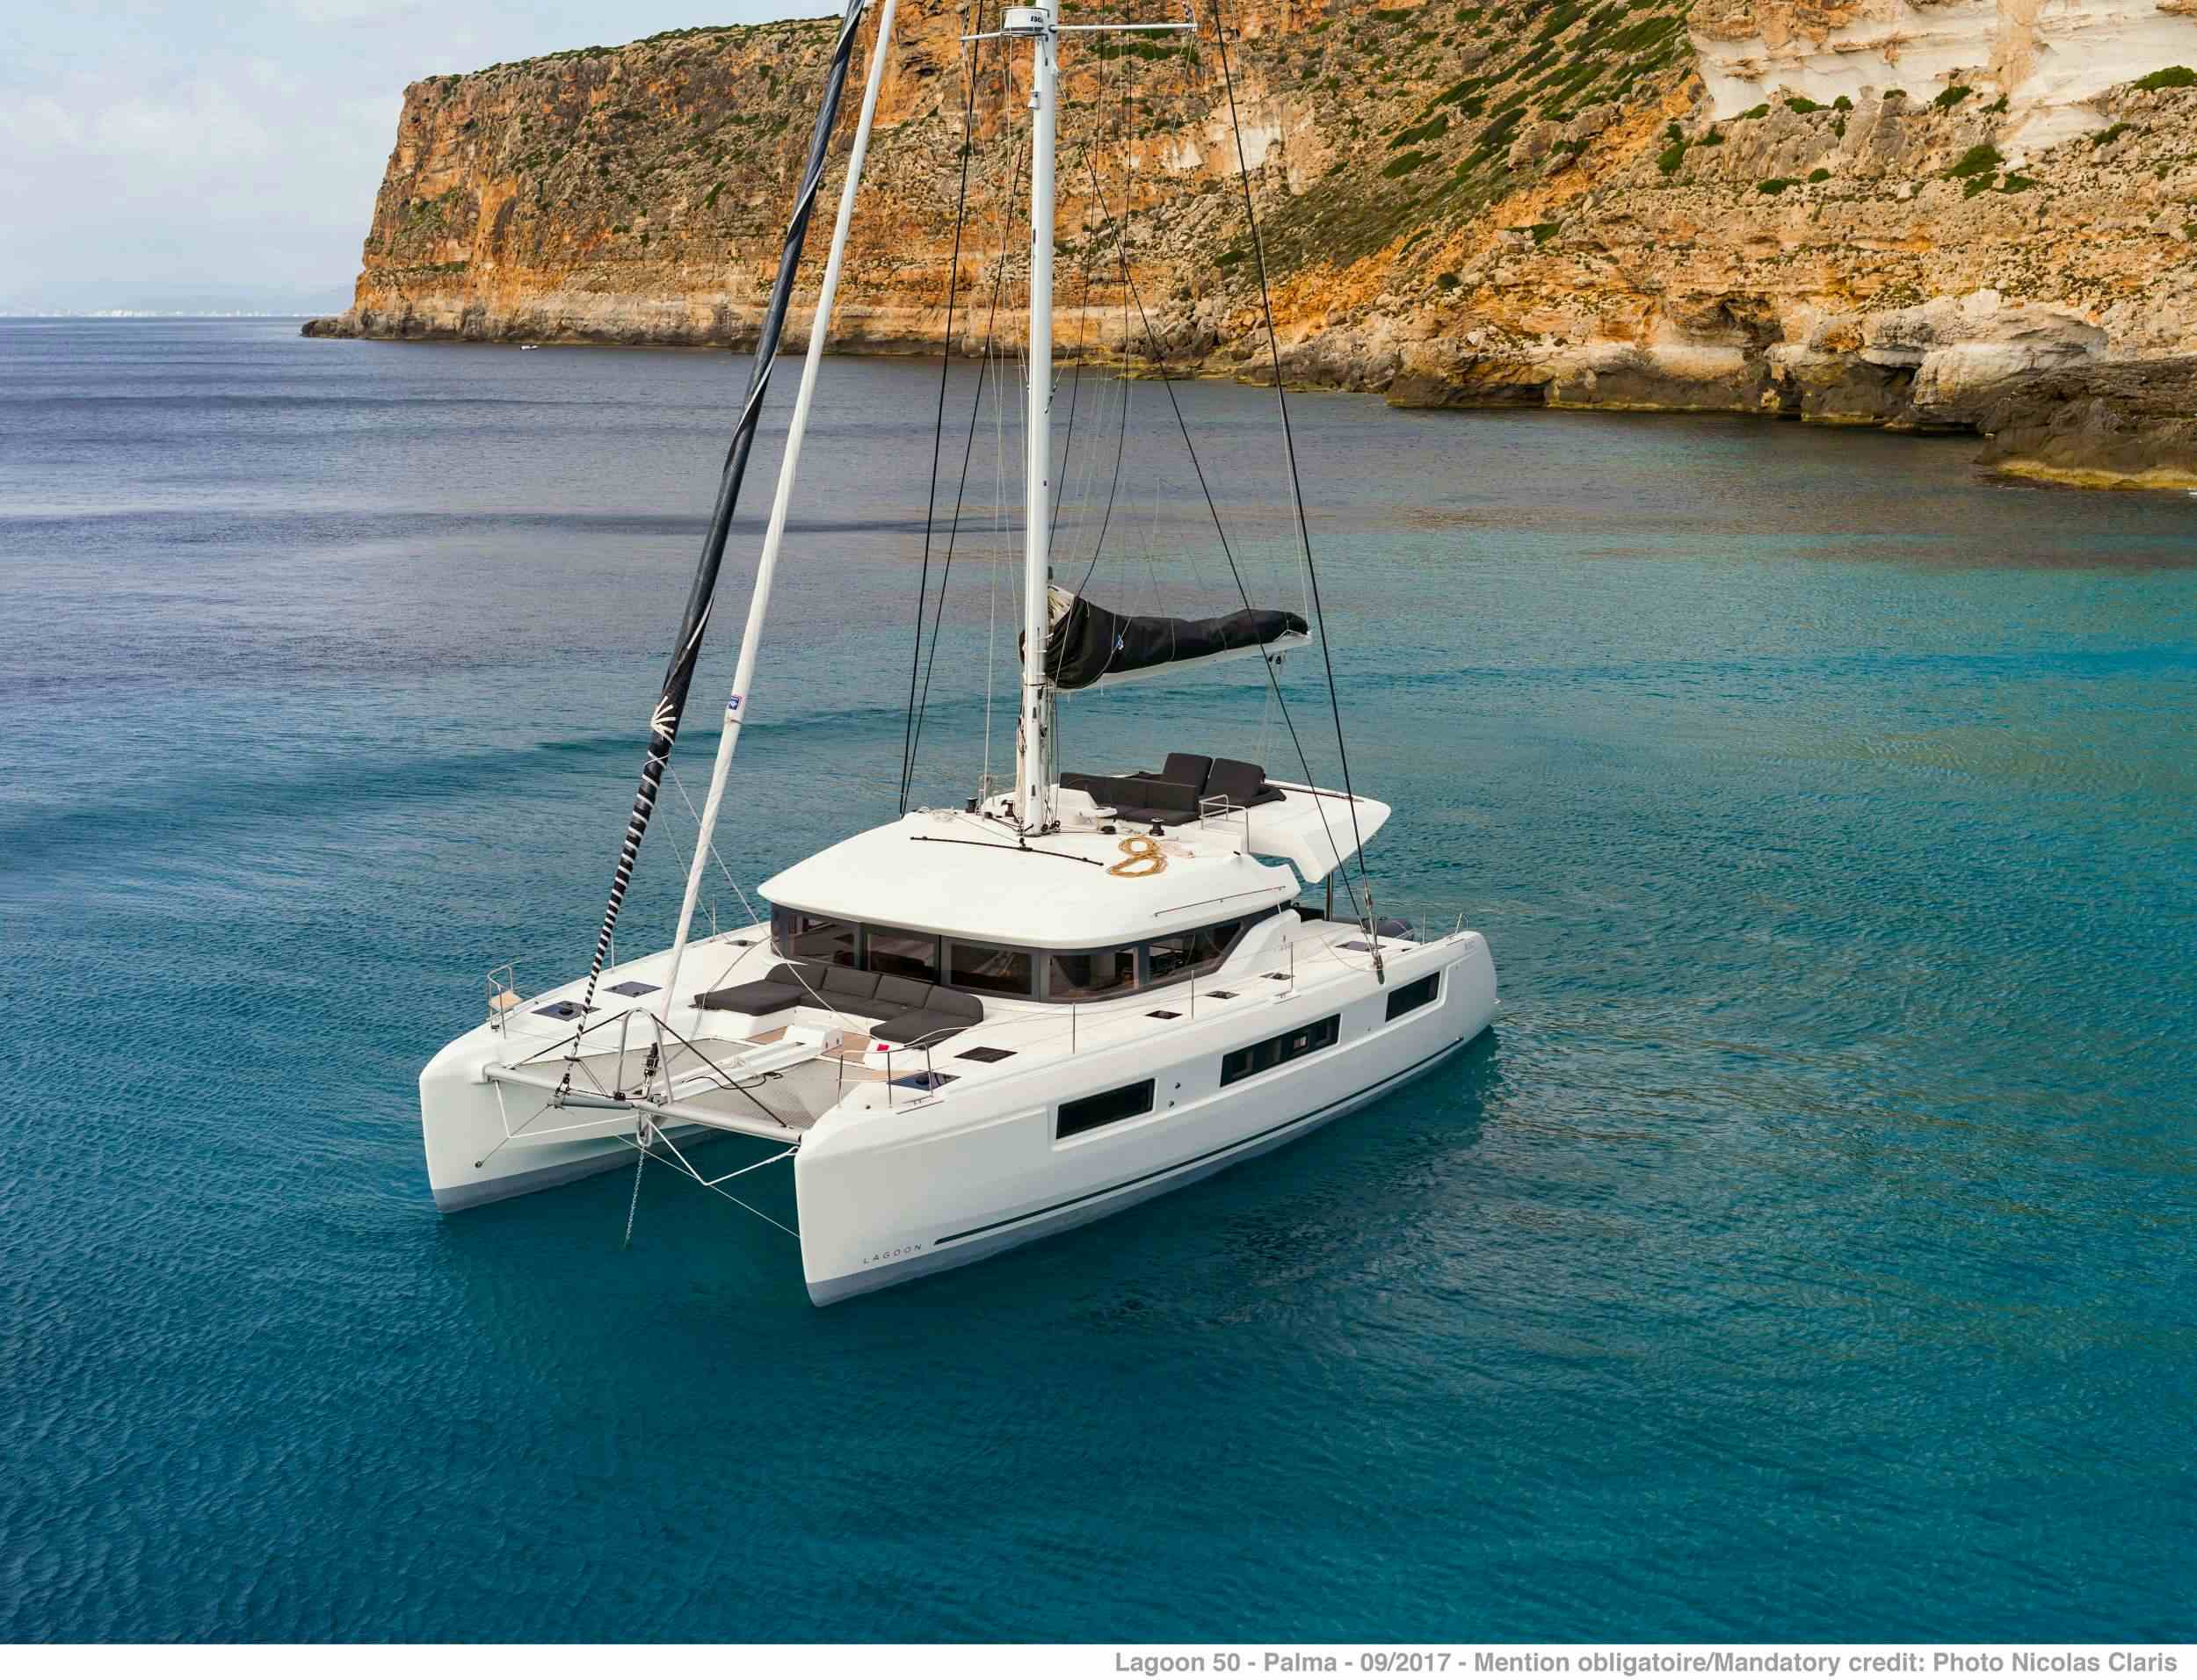 ONEIDA 2 - Catamaran charter Ibiza & Boat hire in Greece 1